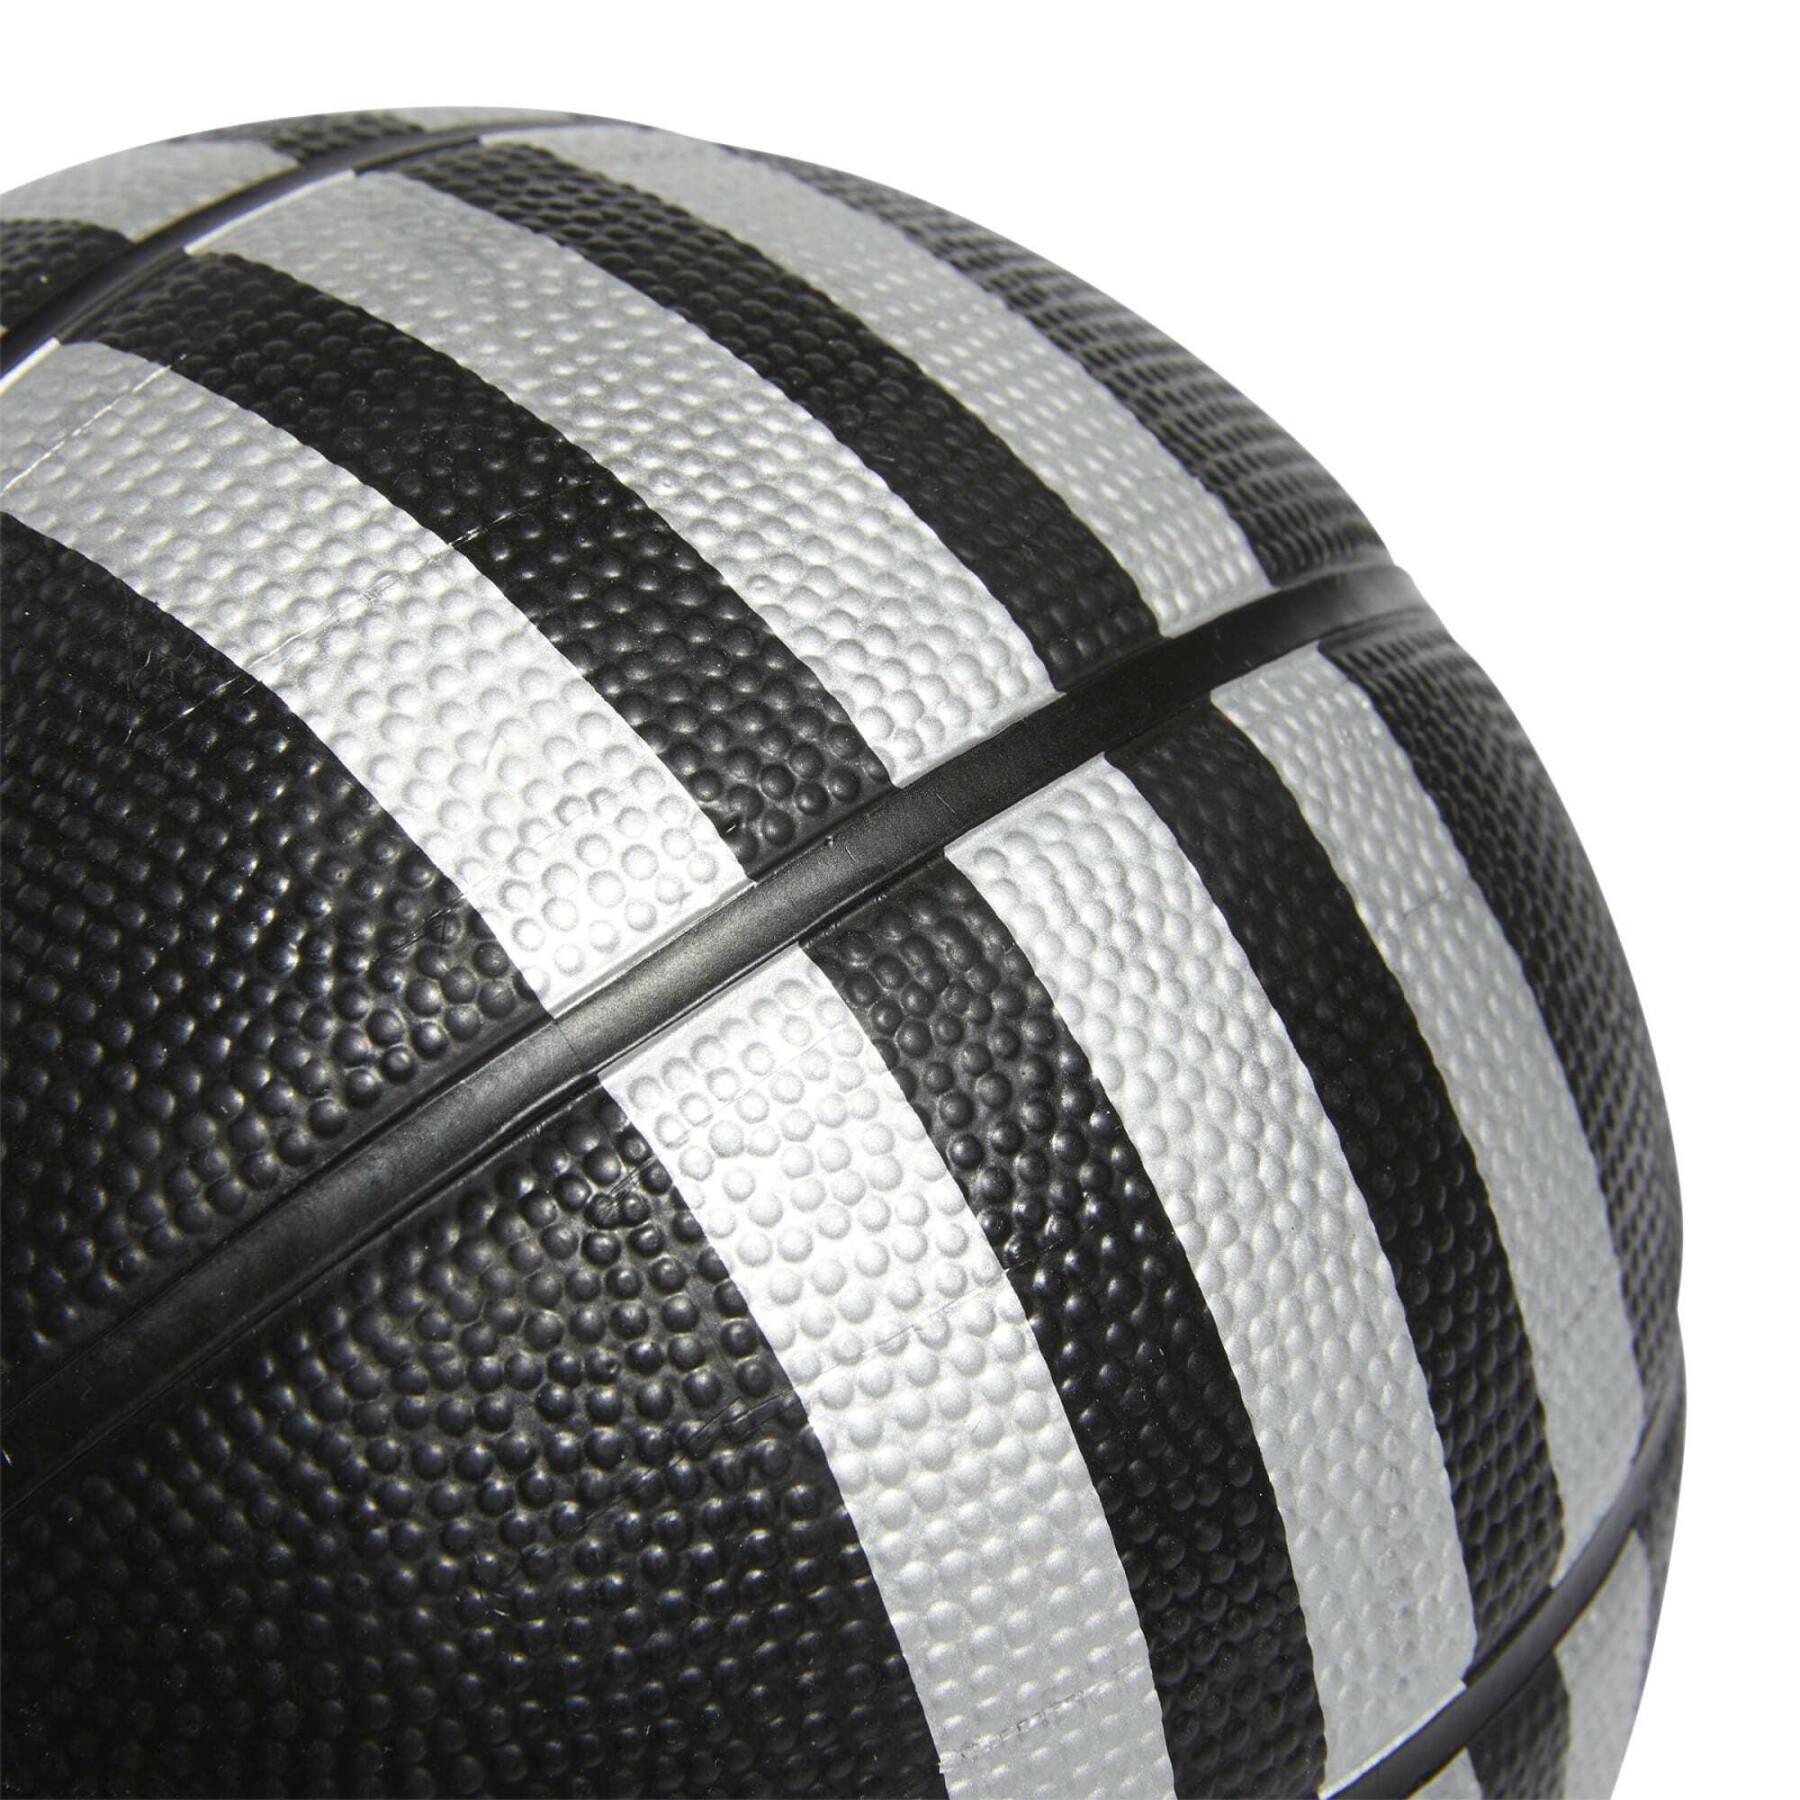 Mini basketbal adidas